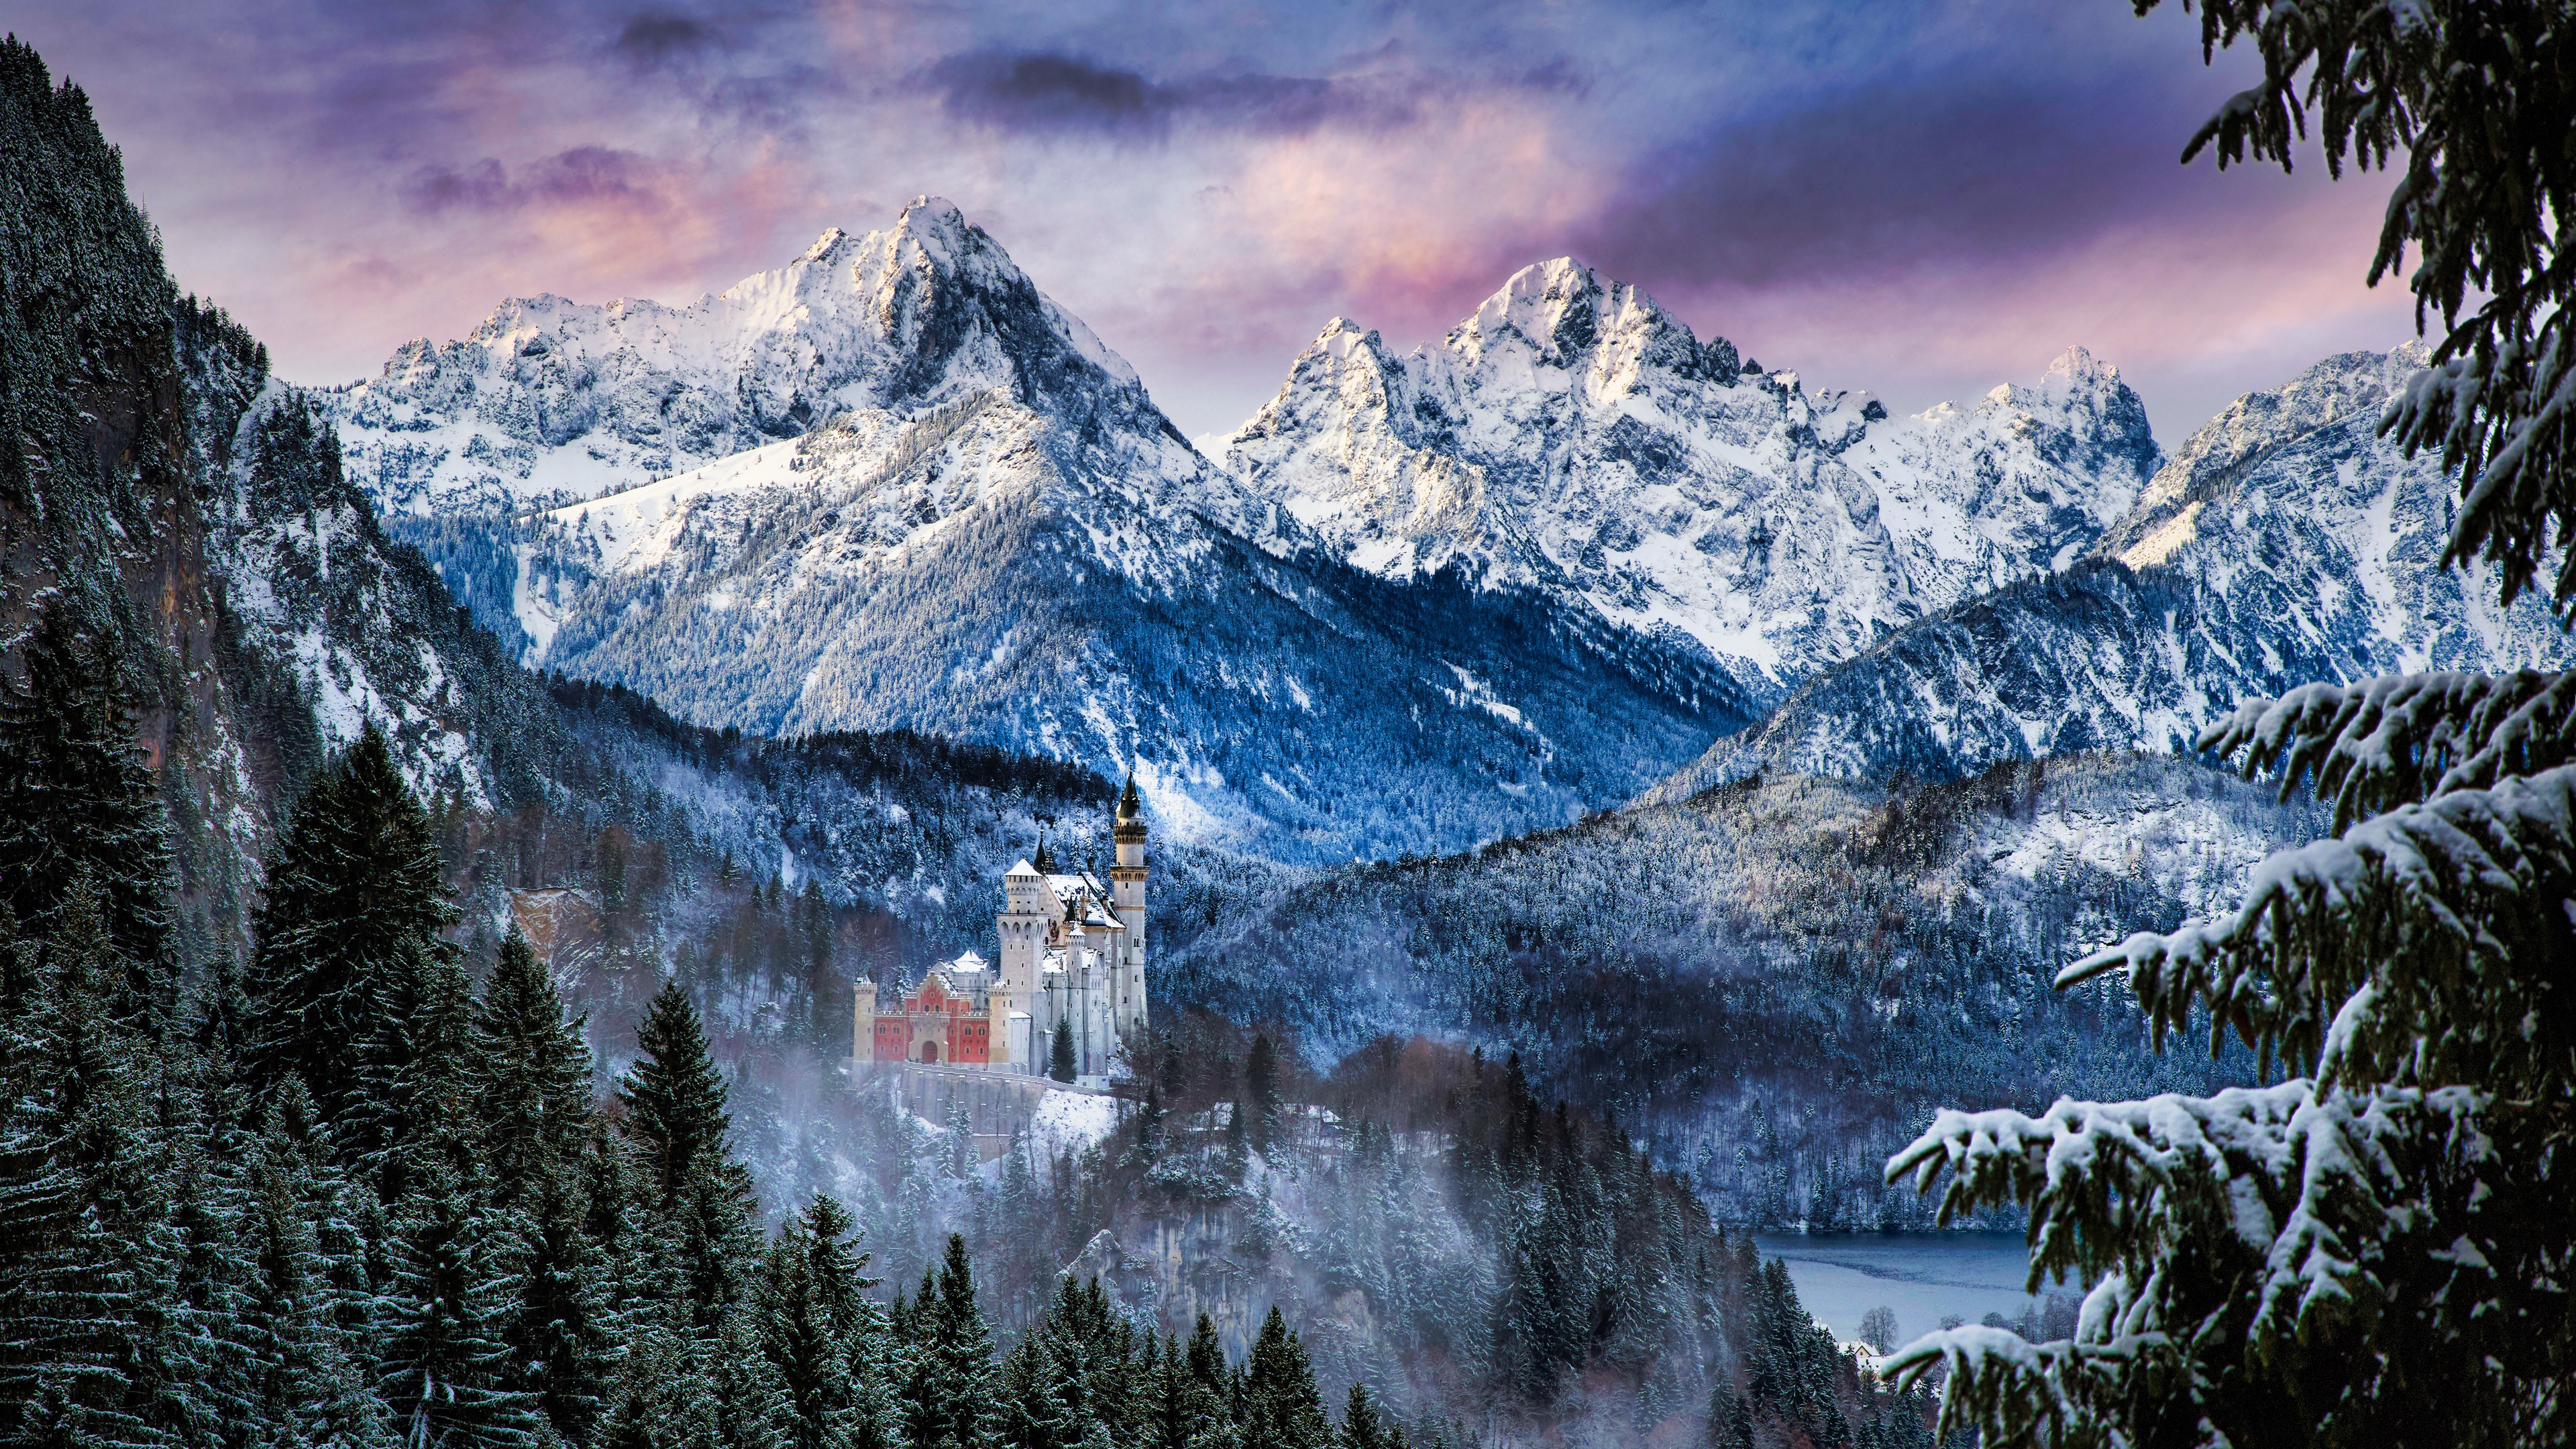 A picture of Neuschwanstein Castle in wintertime